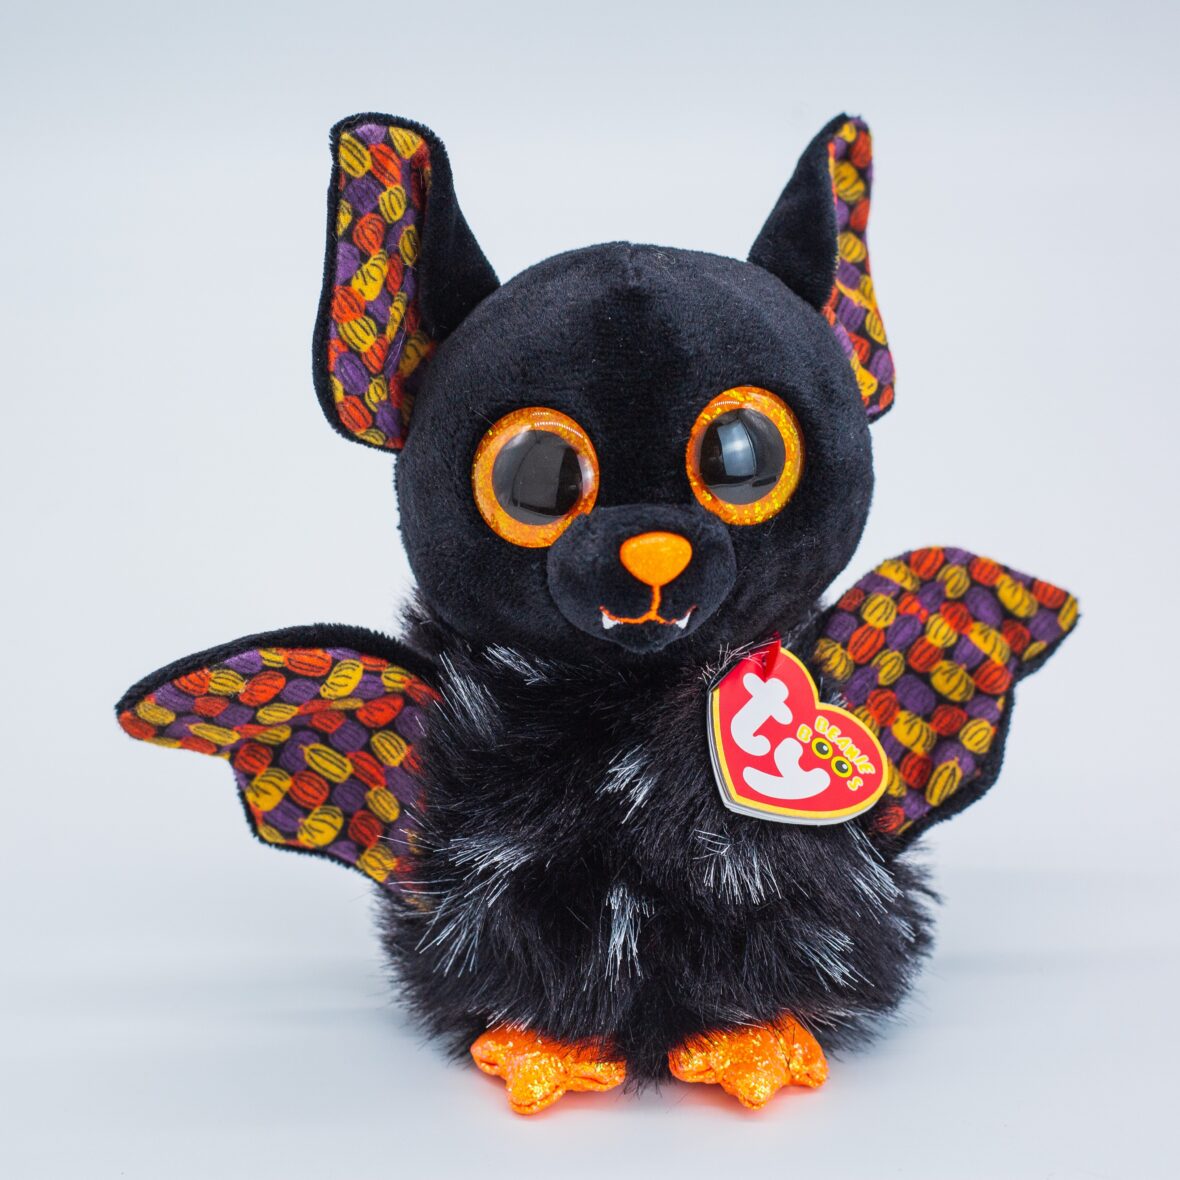 Big Eyes Bat Soft Stuffed Plush Toy